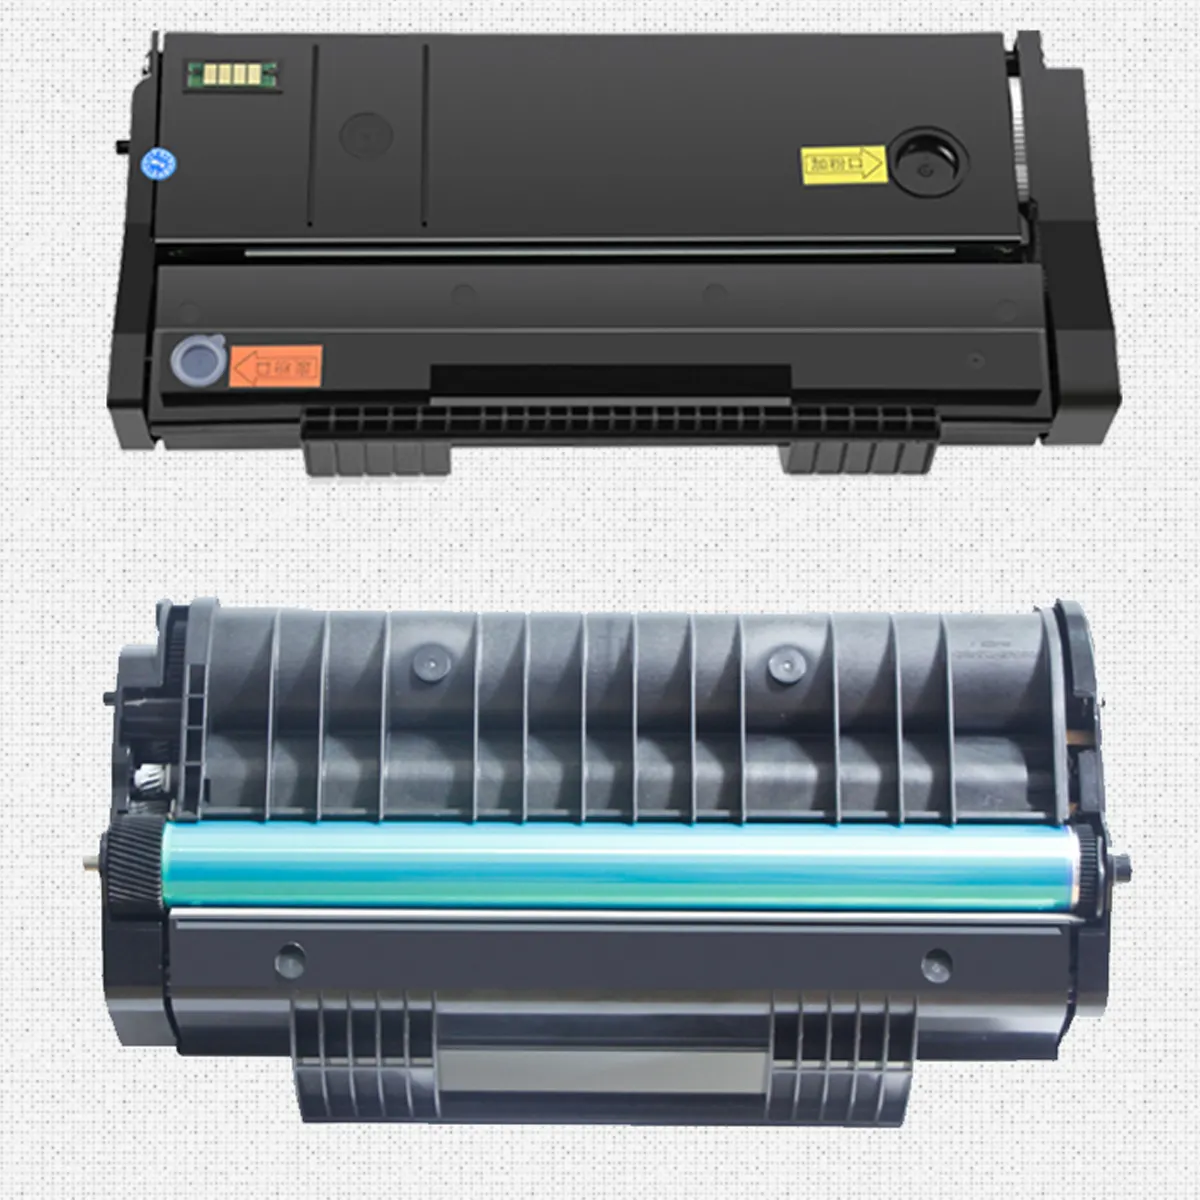 Refillable For Ricohs Aficio SP150X SP150SU SP150SF SP150SUW SP150W SP150S Laser Printer Black Toner Cartridge with chip